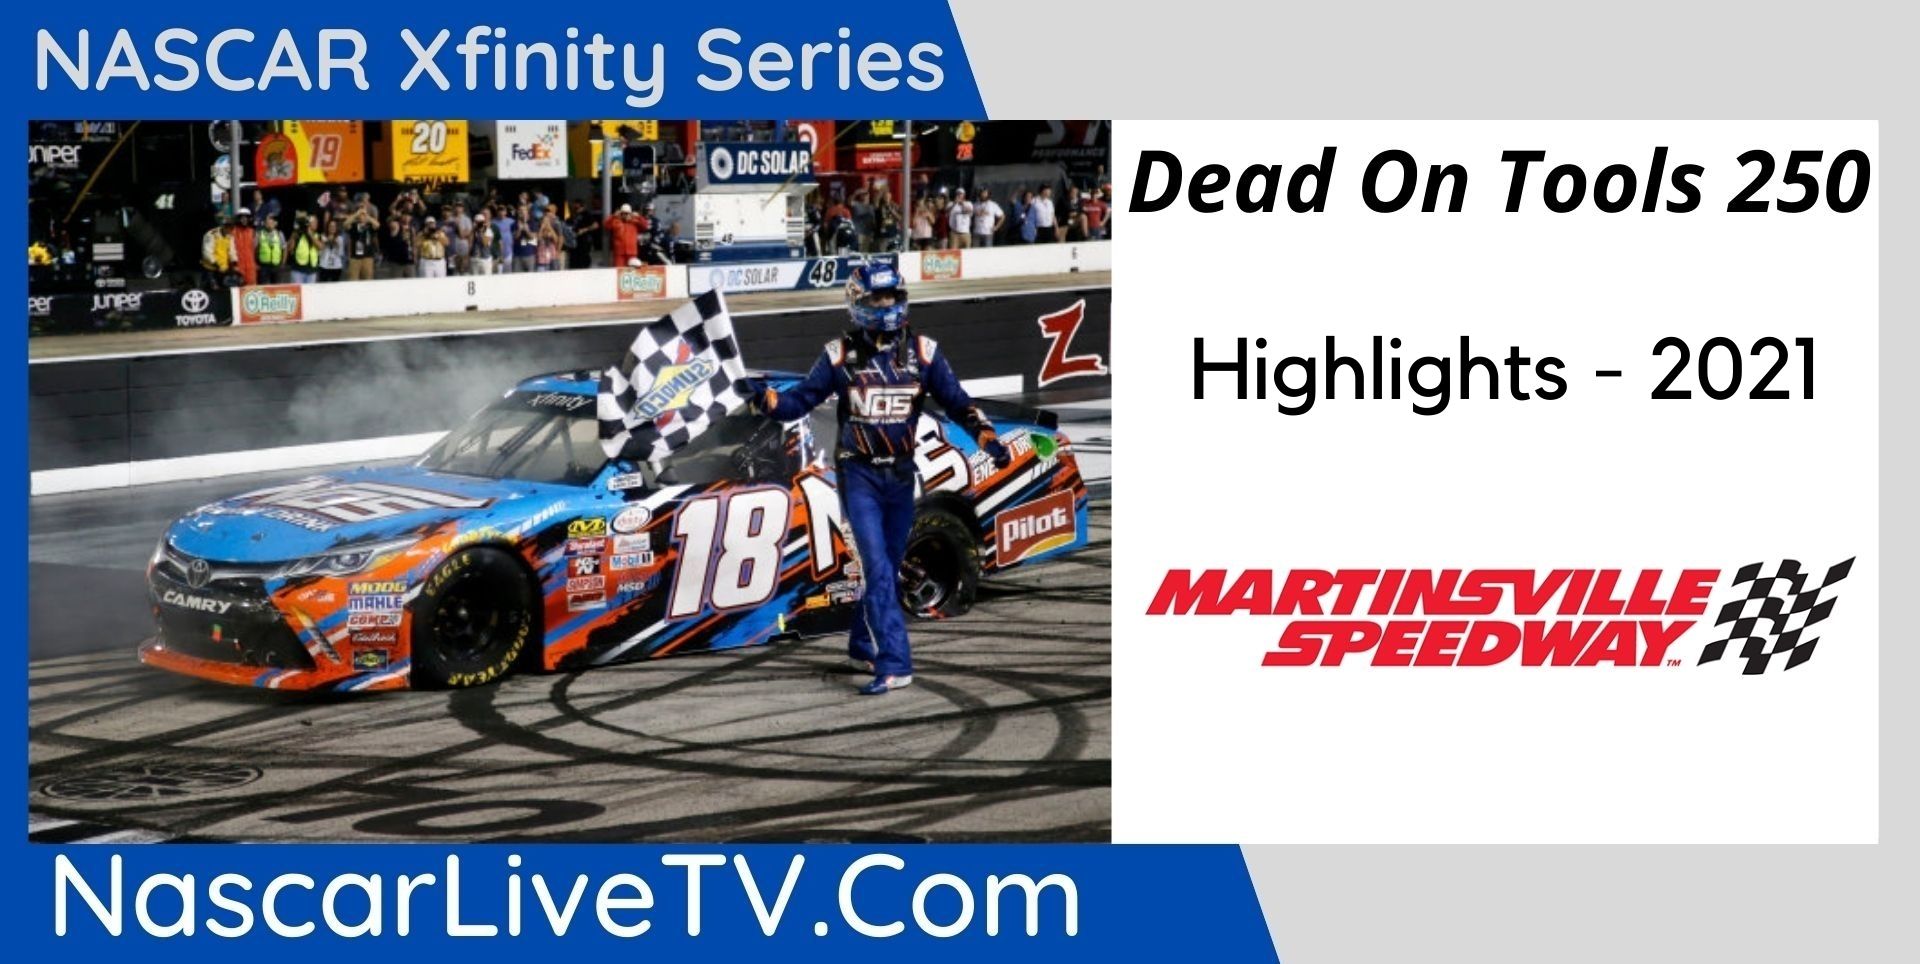 Dead On Tools 250 Highlights NASCAR Xfinity Series 2021